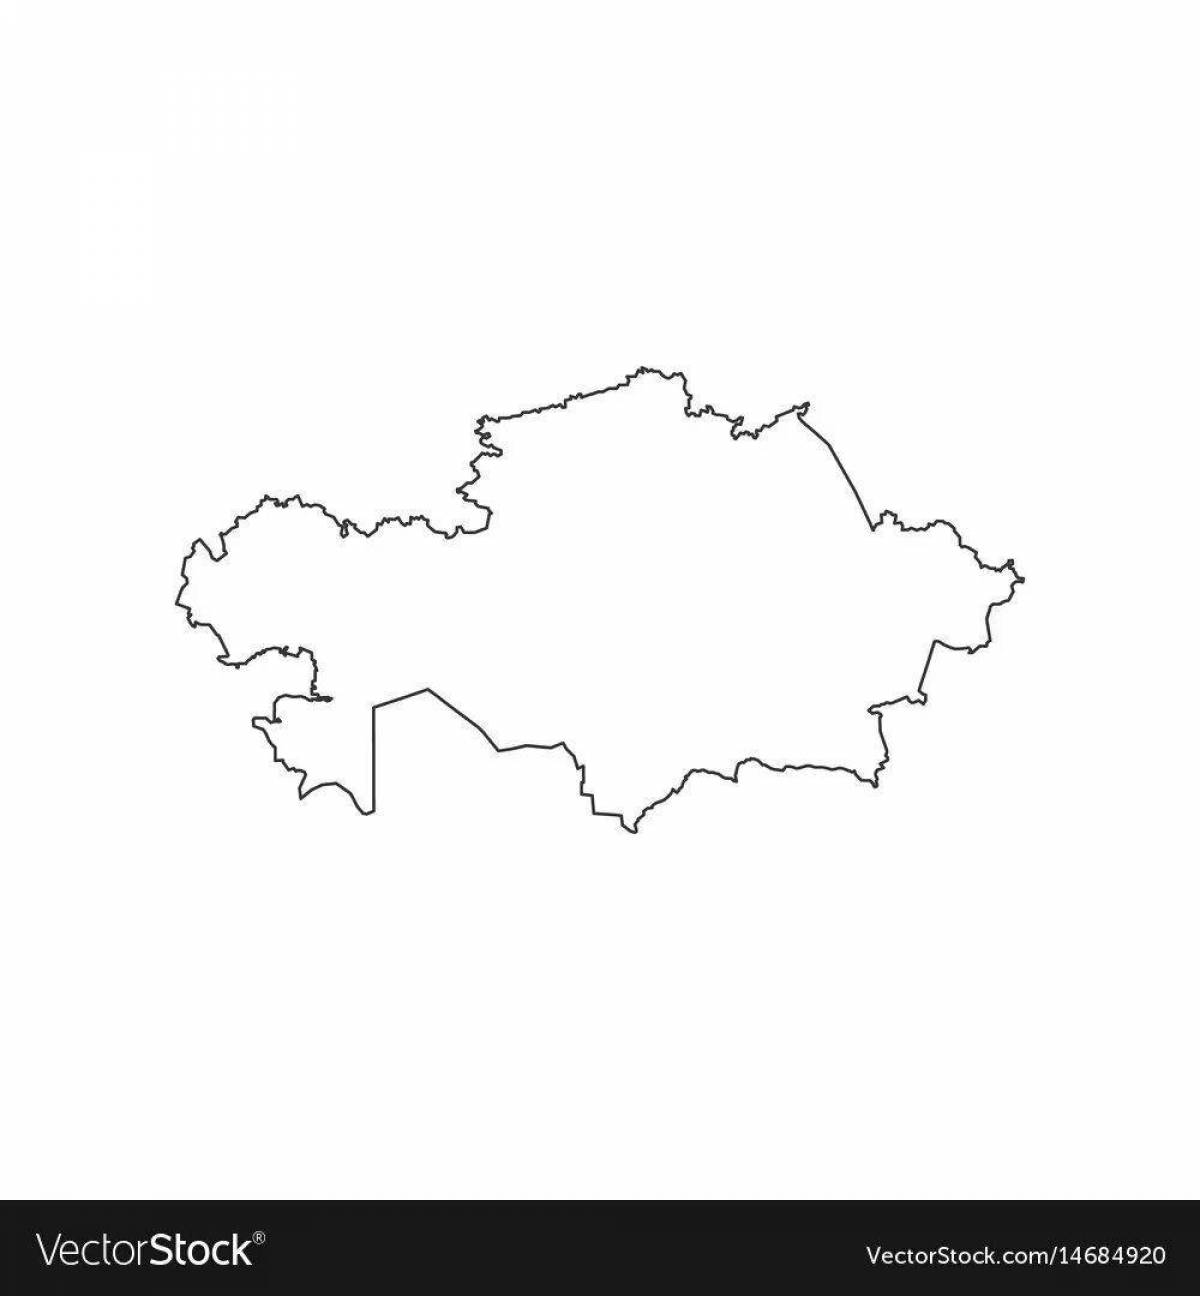 Раскраска сказочные карты казахстана